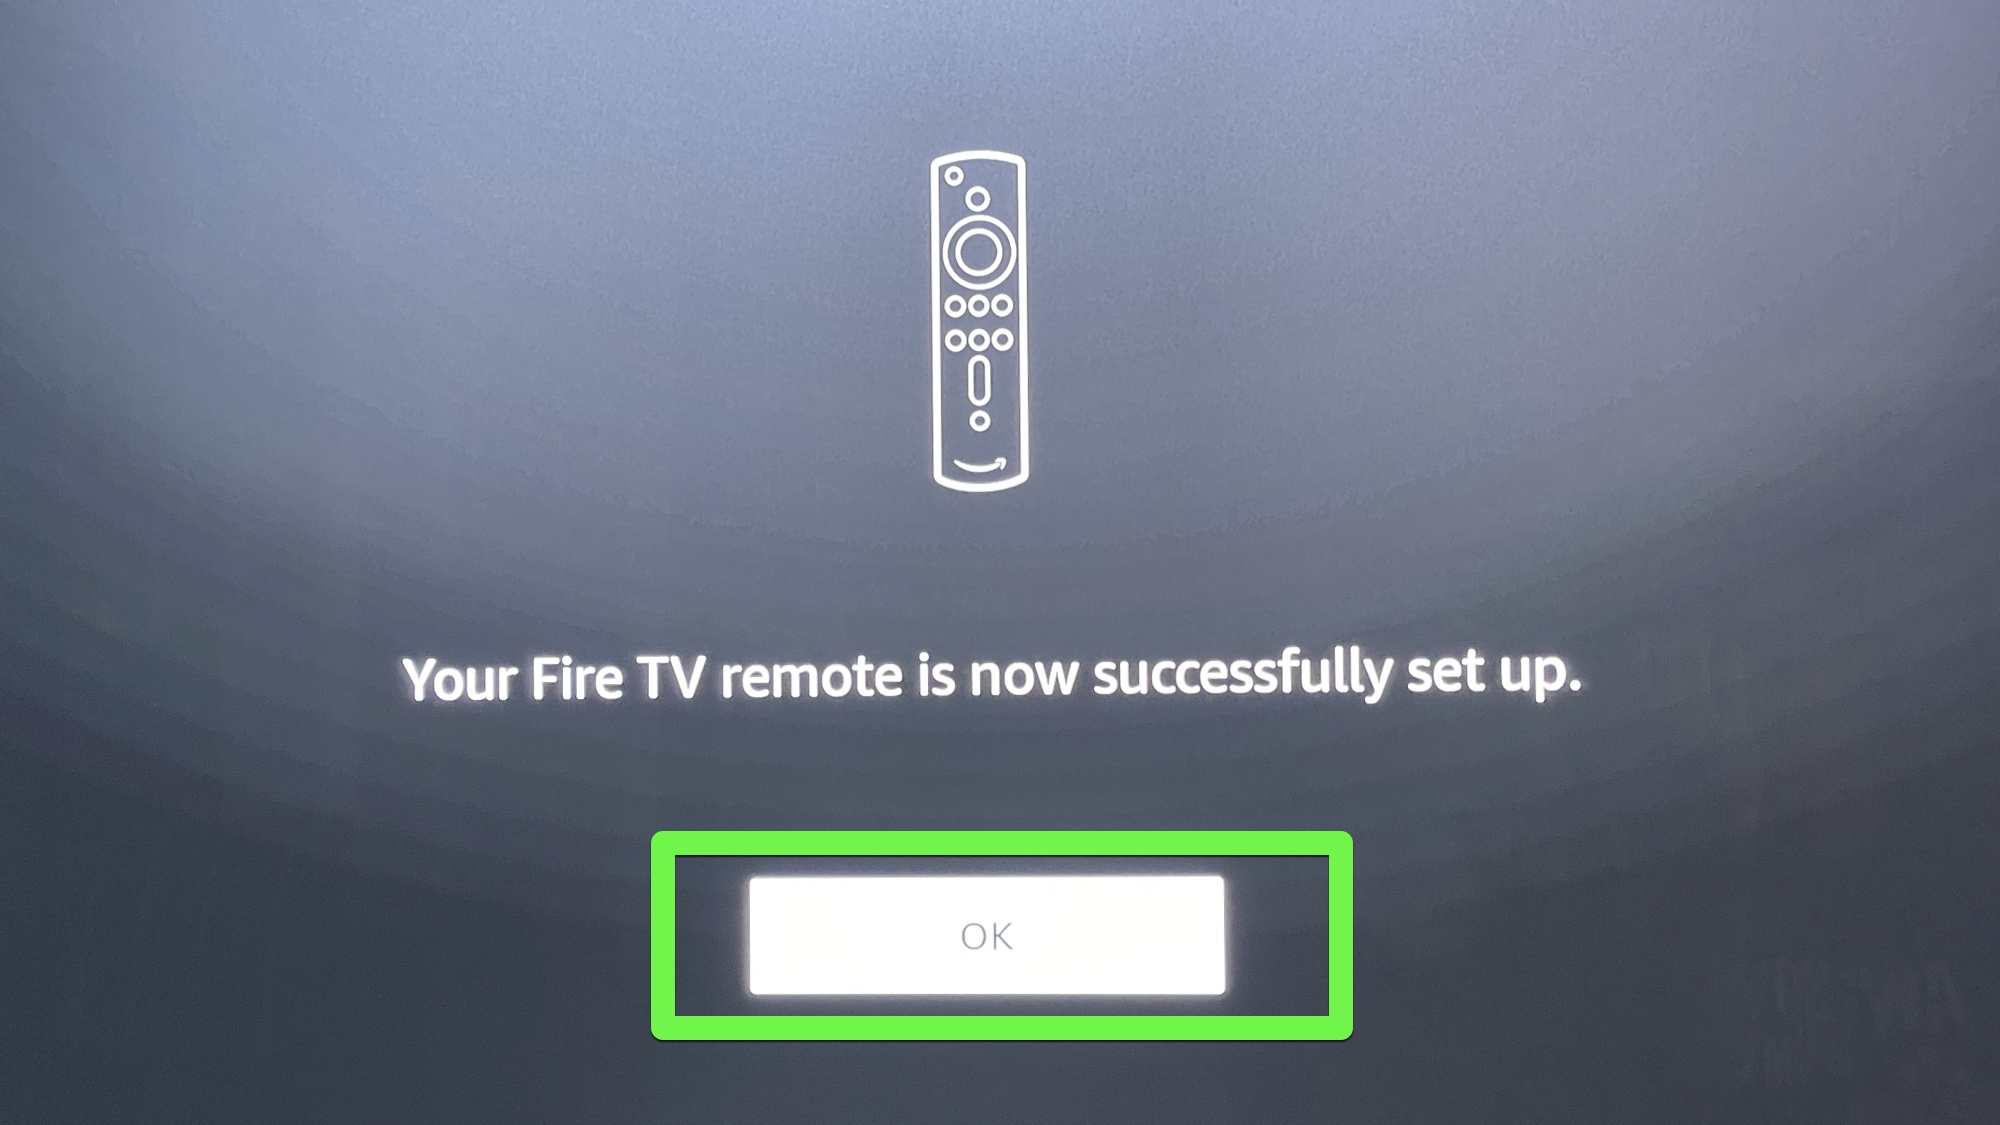 fire tv setup screen for remote, asking you to click OK.